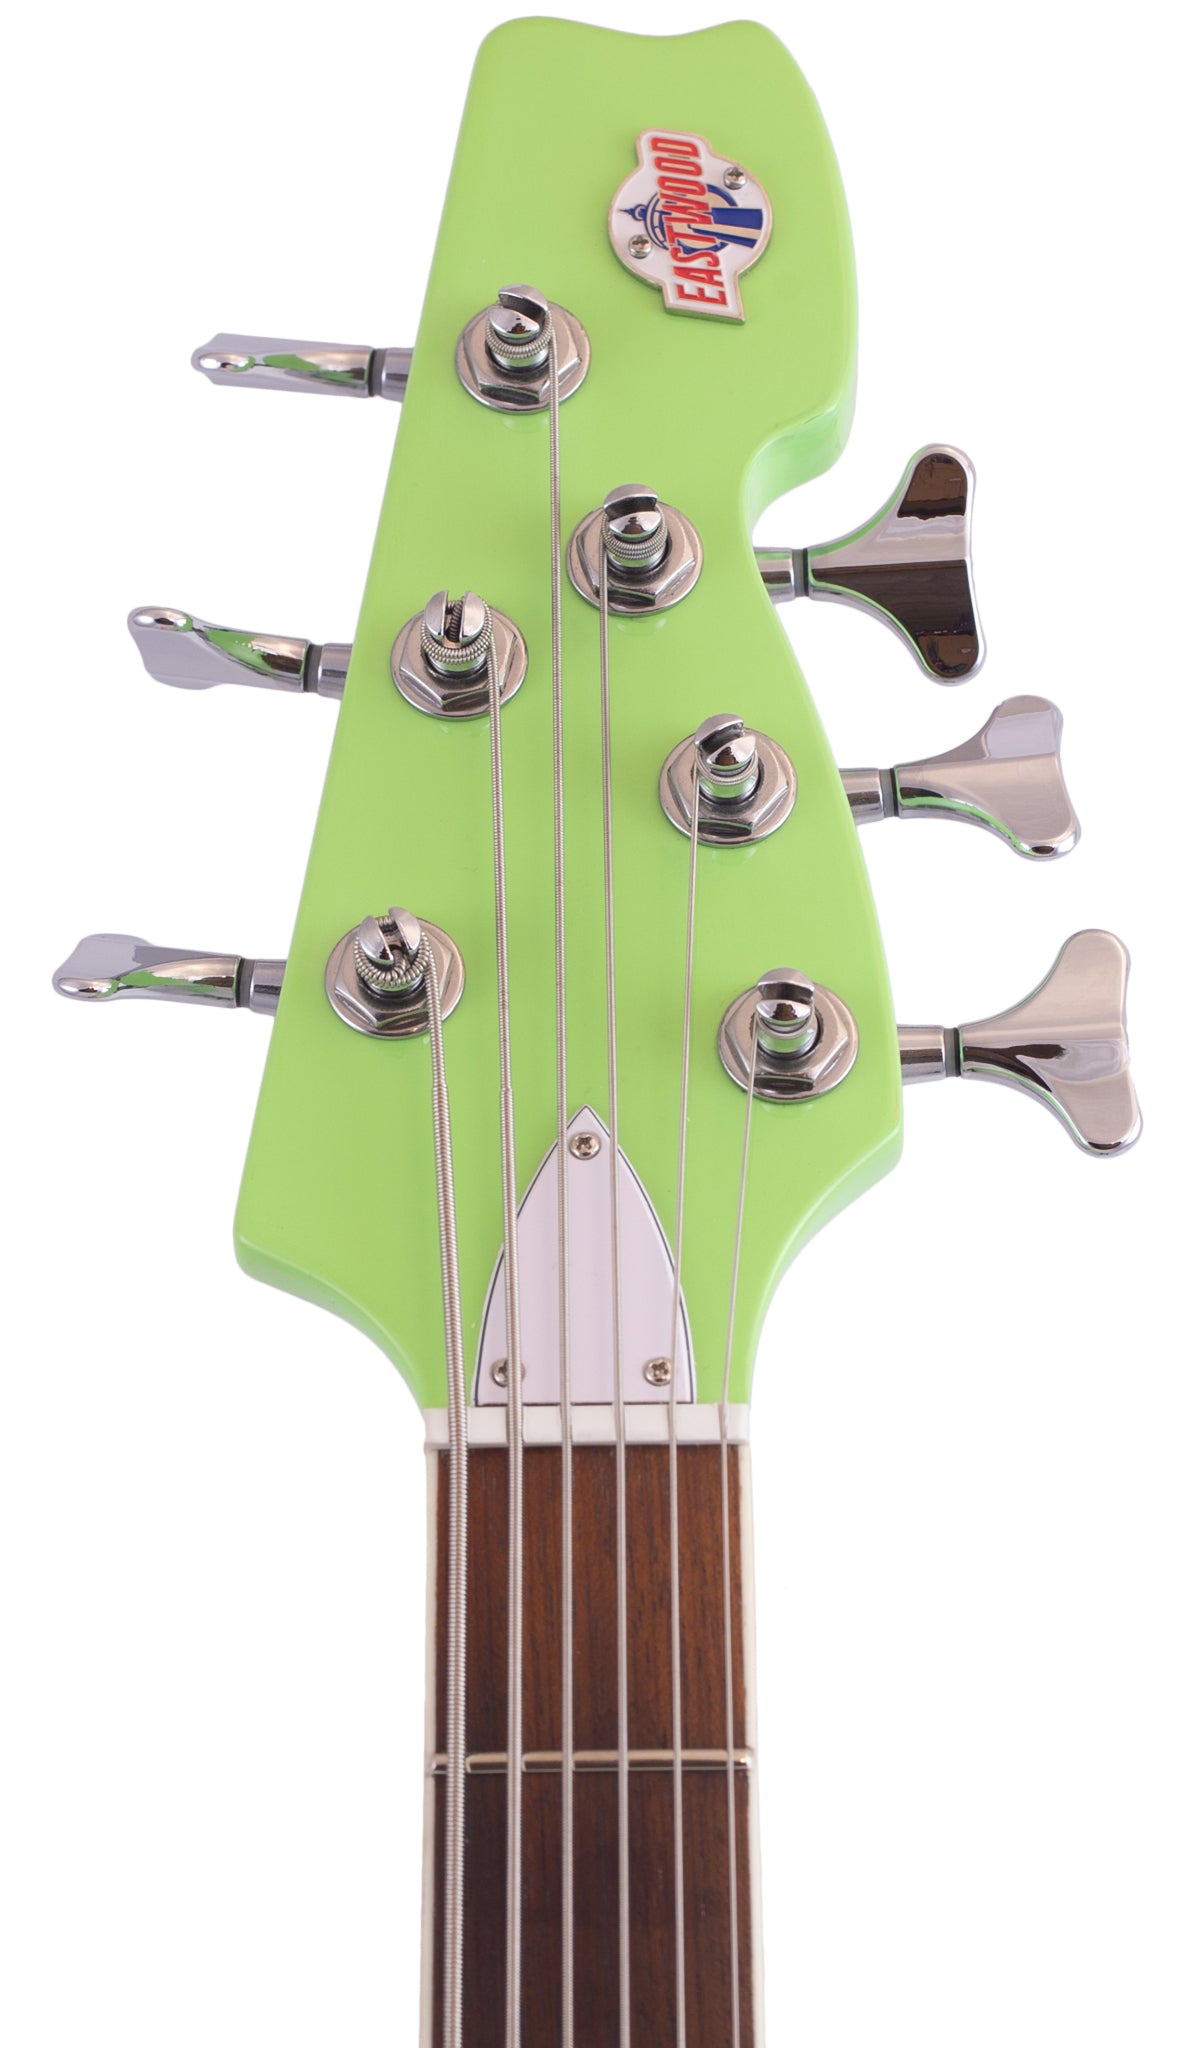 Eastwood TB64 6-String Bass STD #color_vintage-mint-green